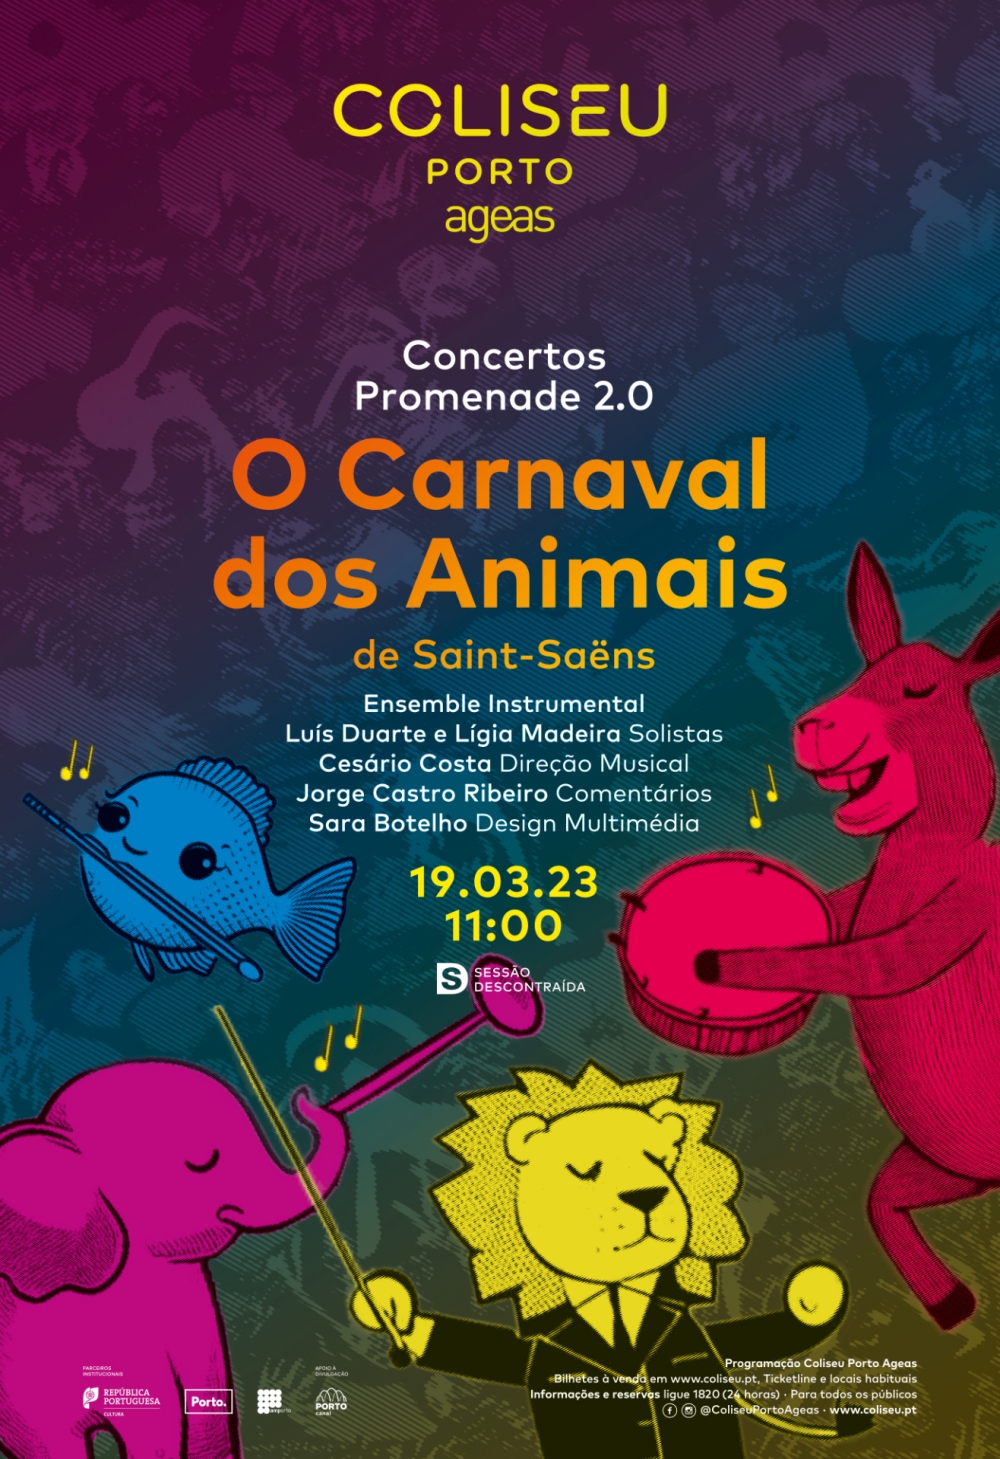 Saint-Saens: Carnaval dos Animais